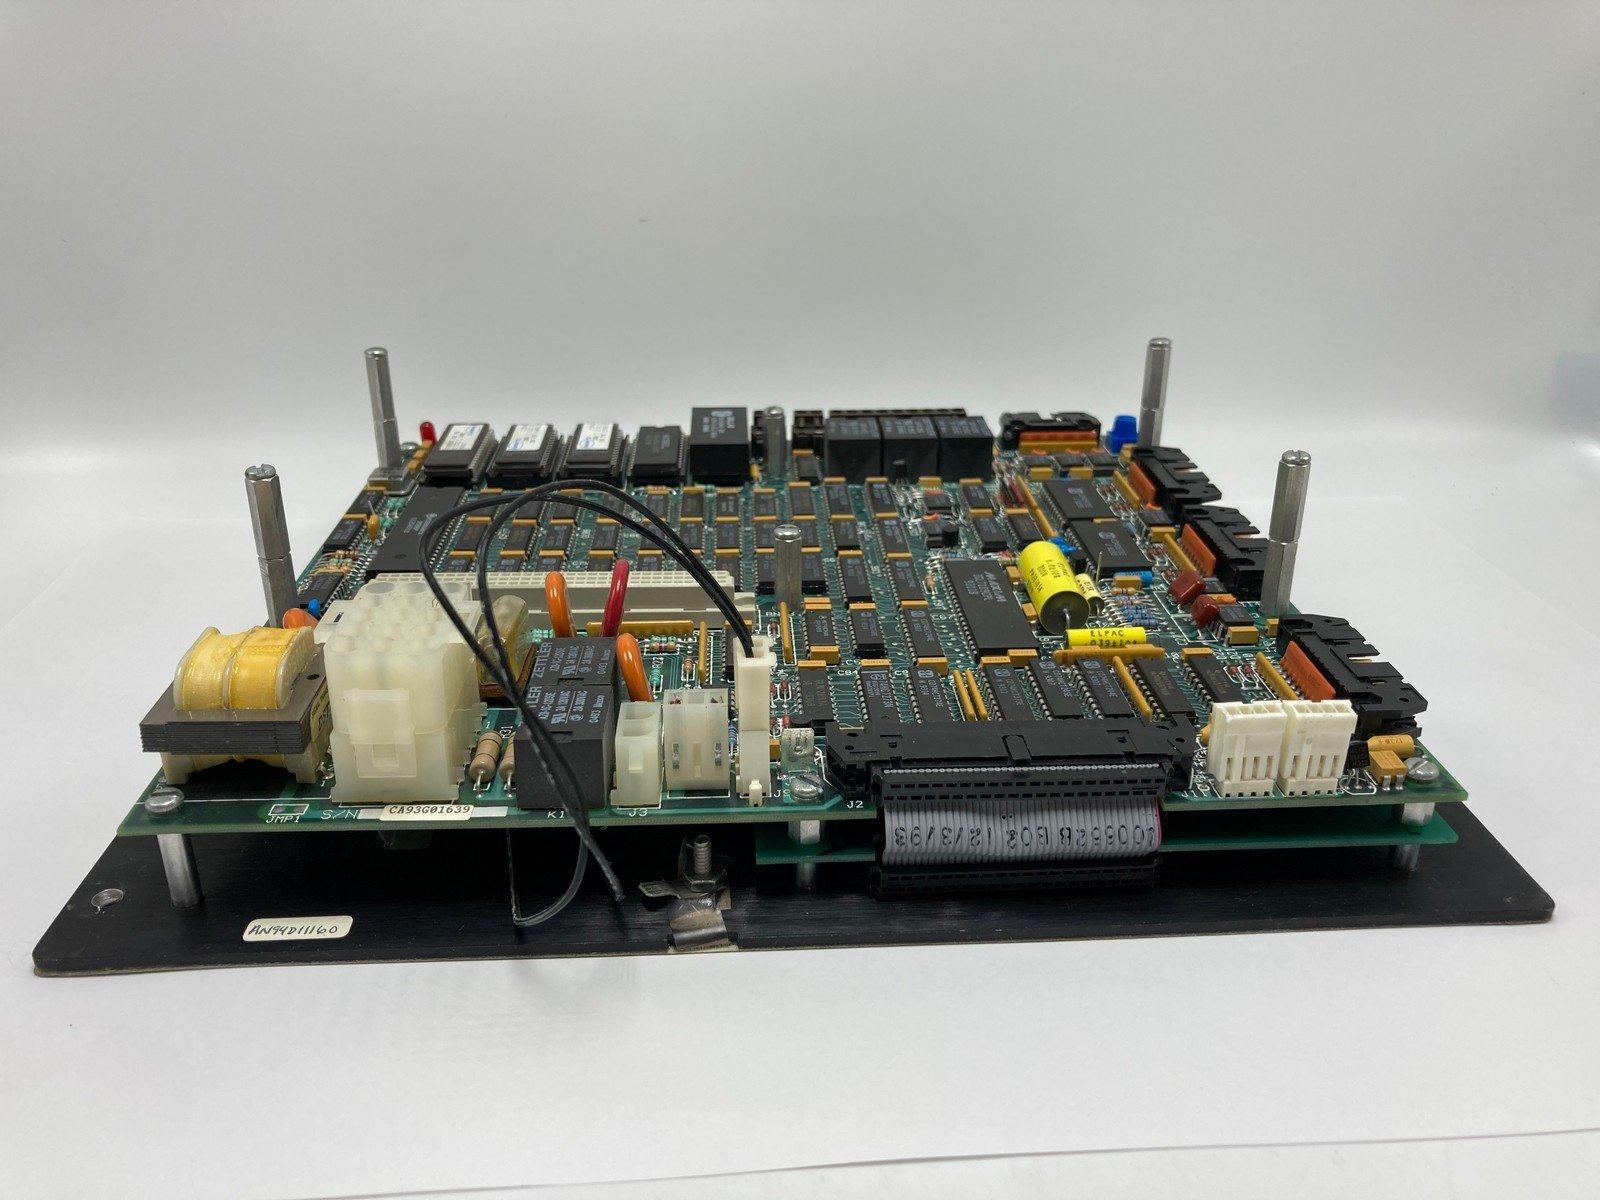 Microset S145953 PLC Omniscan PUSHBUTTON Panel 